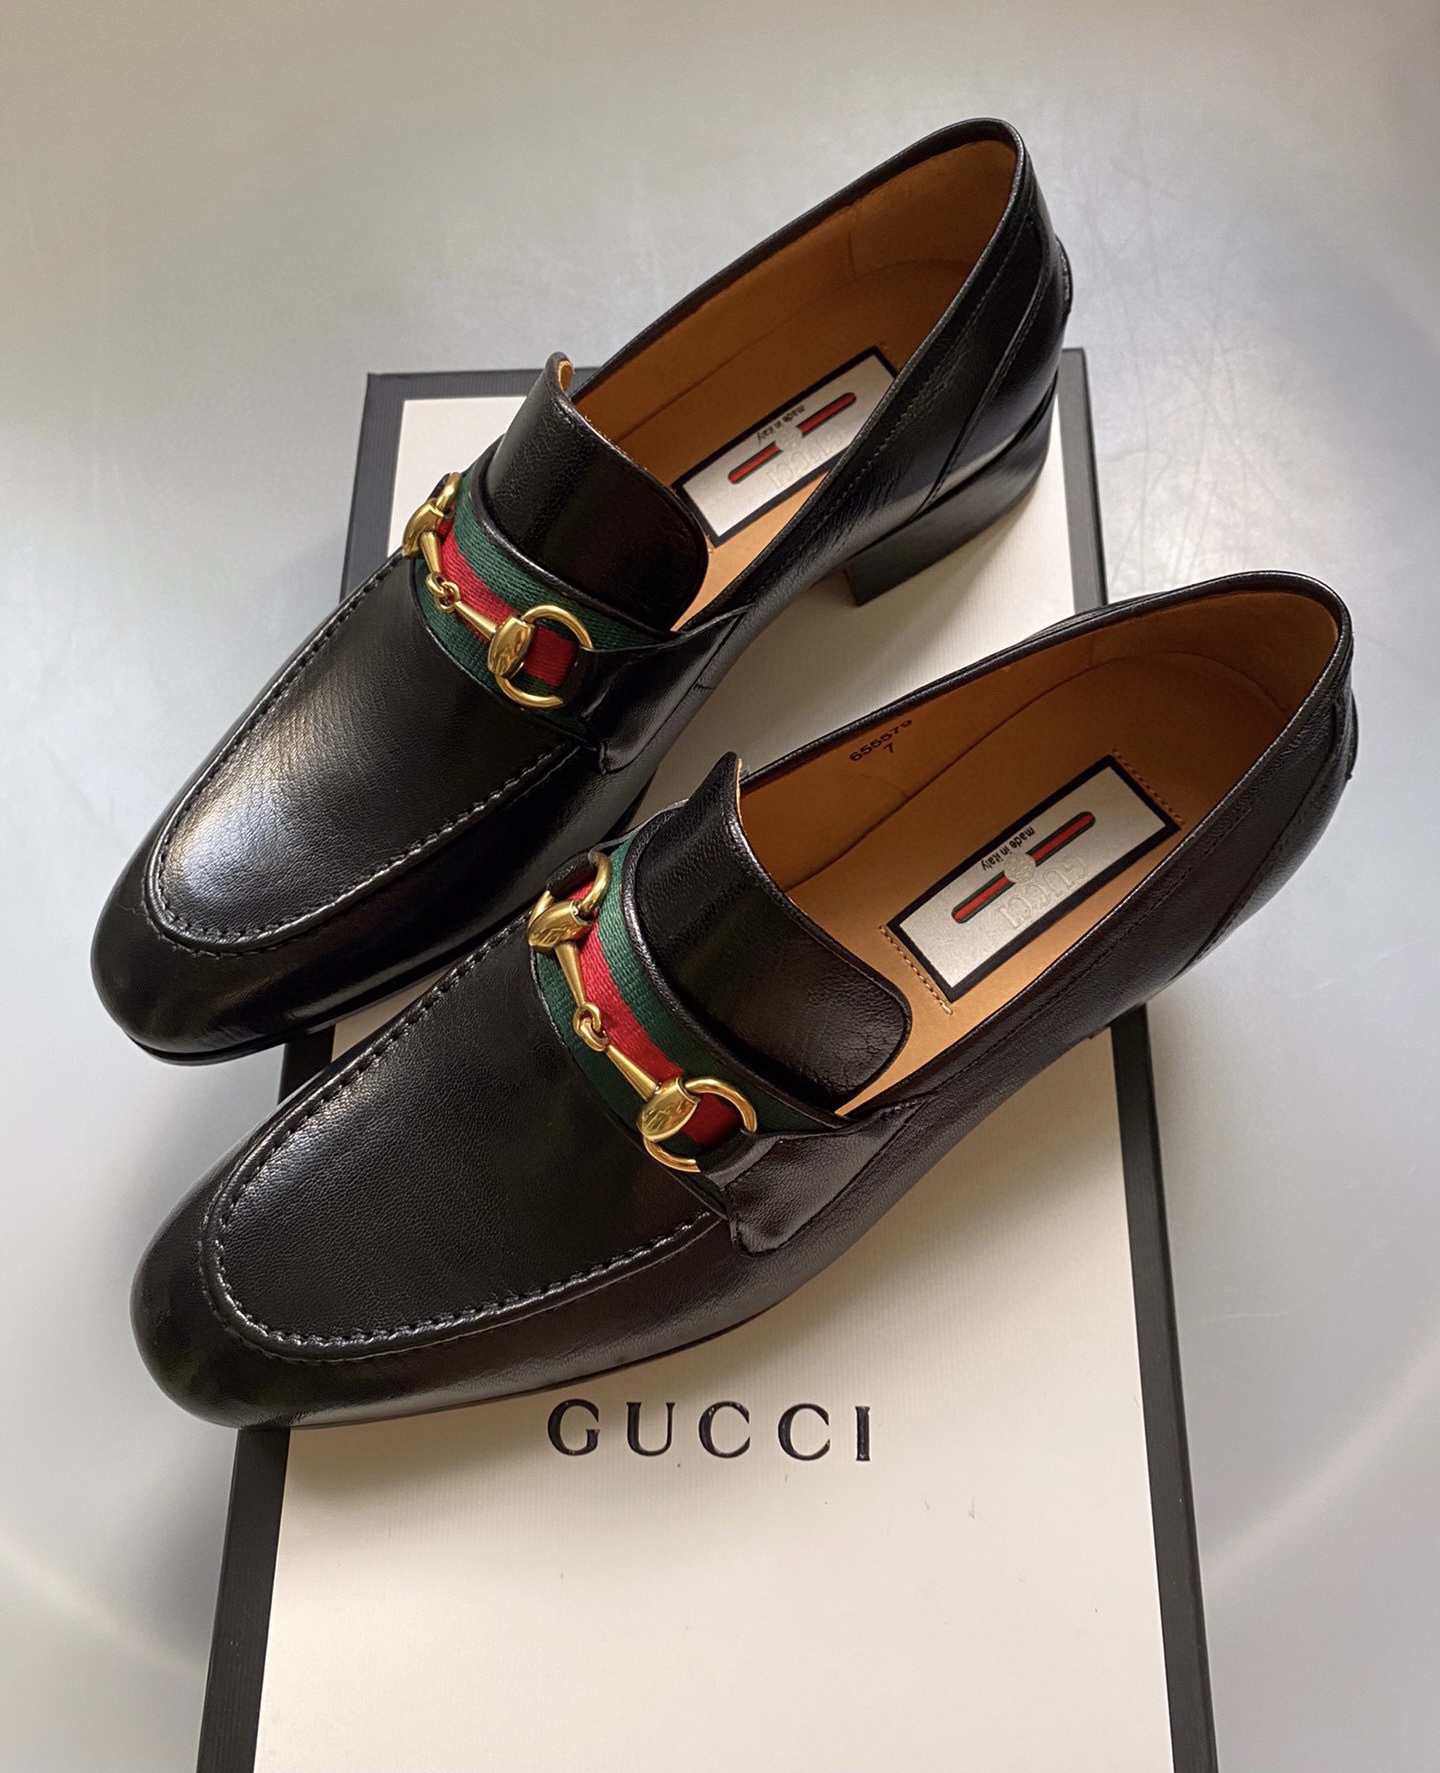 Gucci – billionairemart